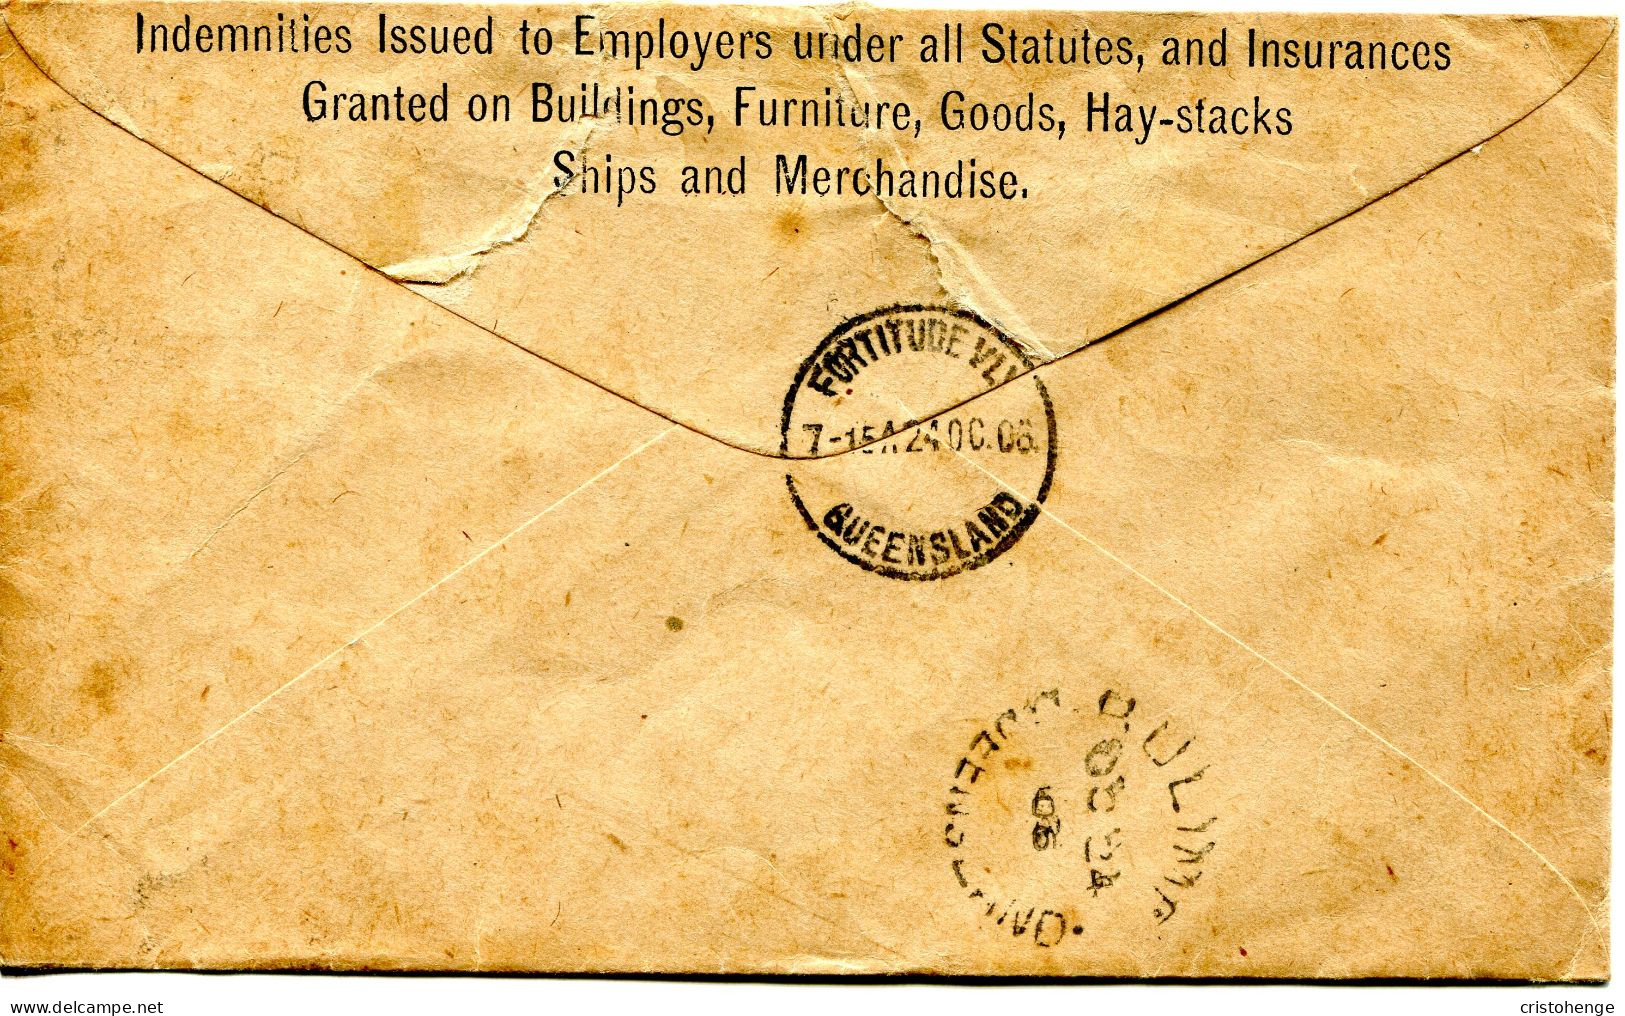 Queensland Australia 1902 New Zealand Insurance Co Ltd (Fire, Marine) - 1d Private Printed Stationery Envelope Cover - Storia Postale